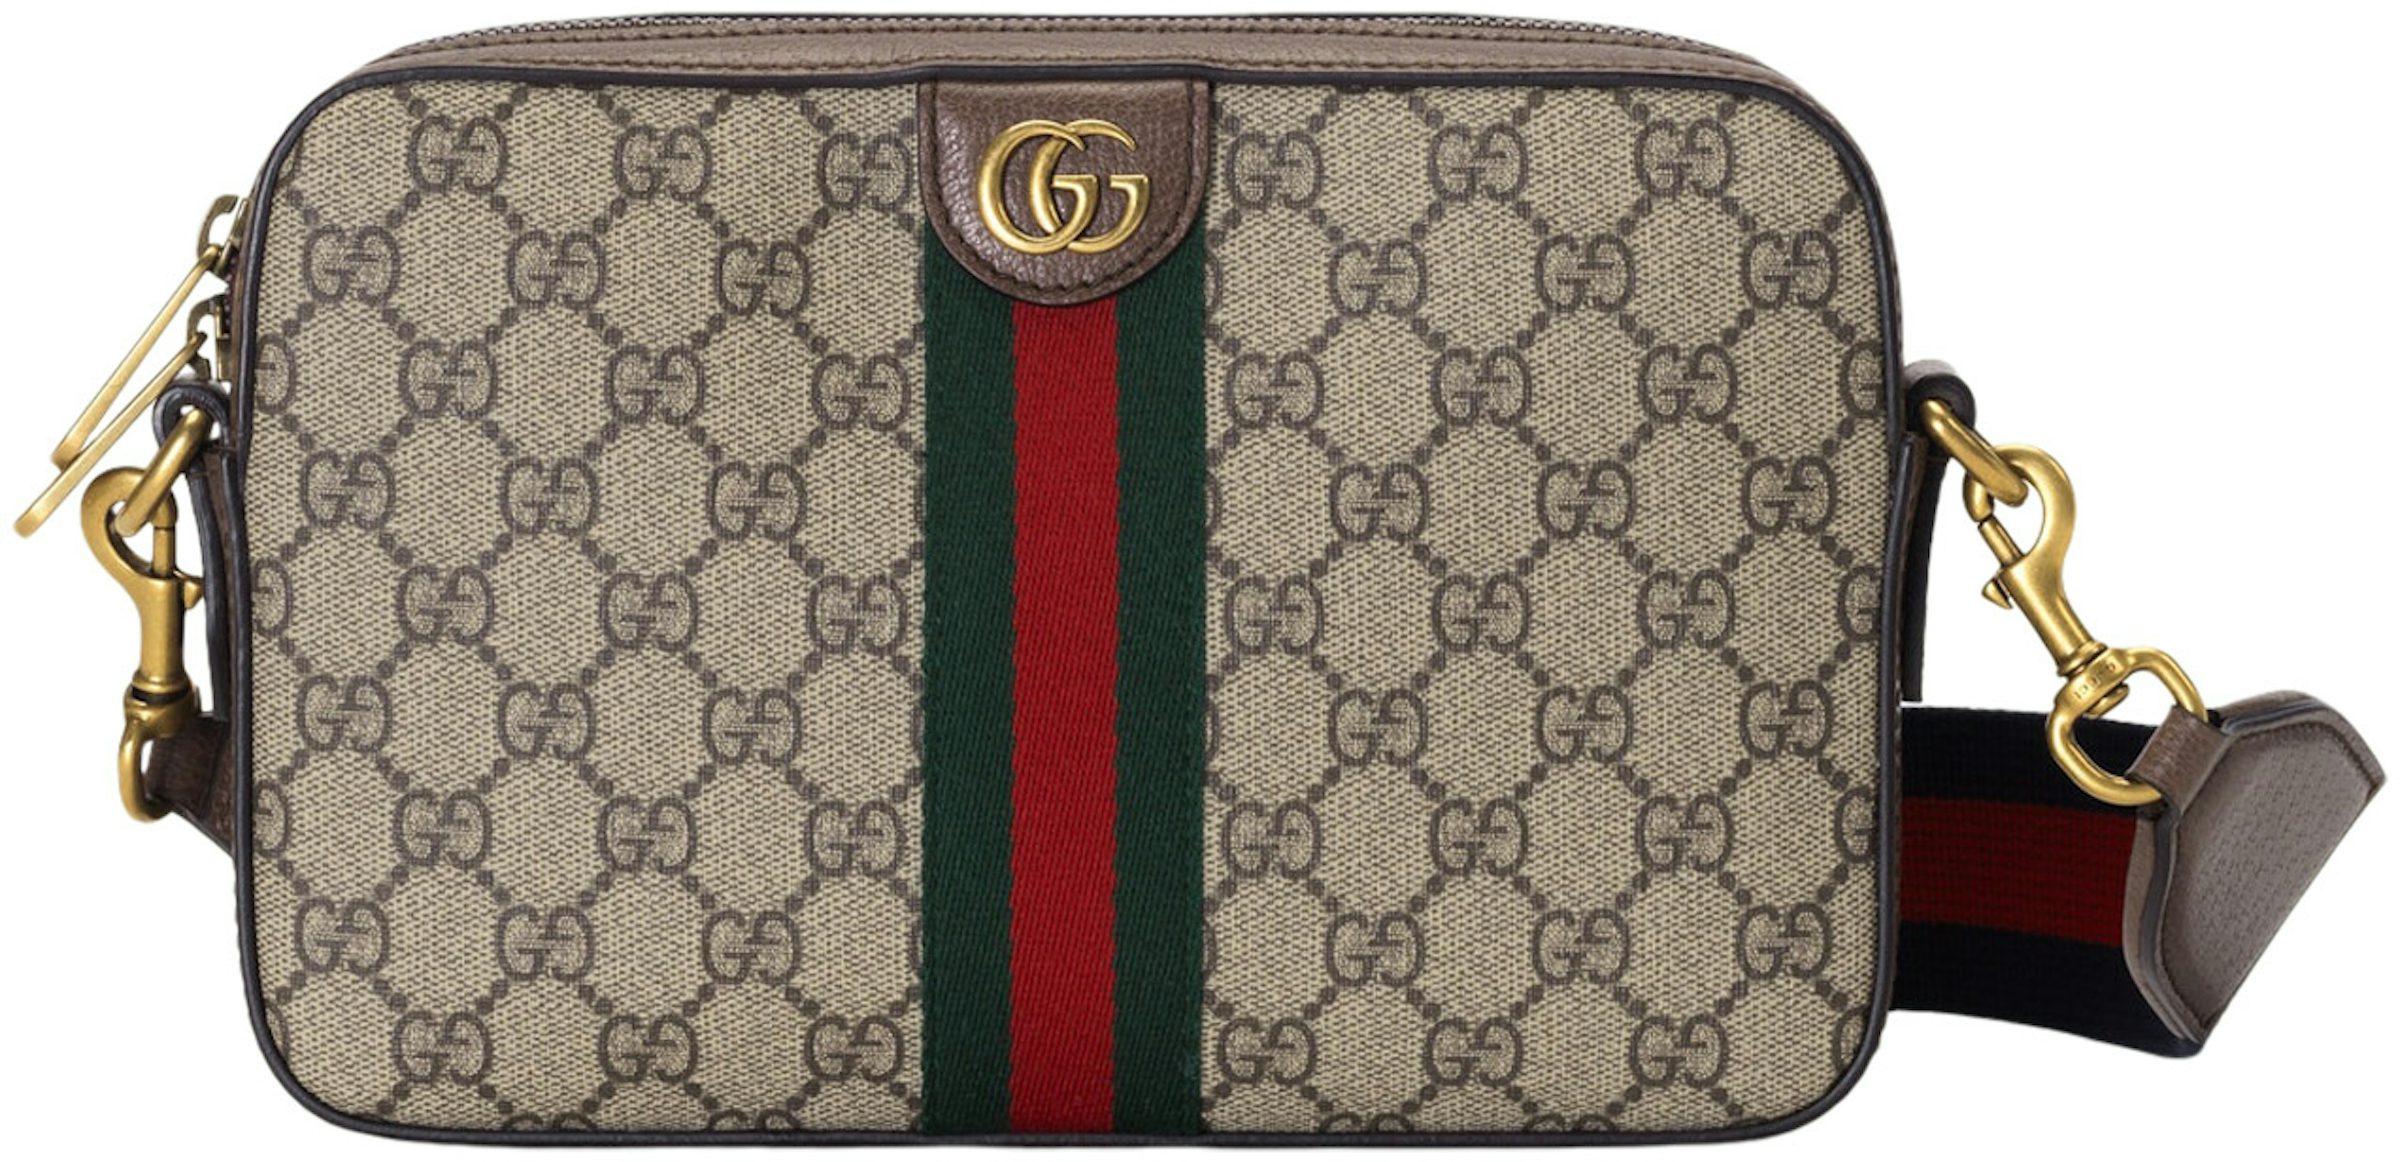 Beige Ophidia mini GG Supreme-canvas top-handle bag, Gucci